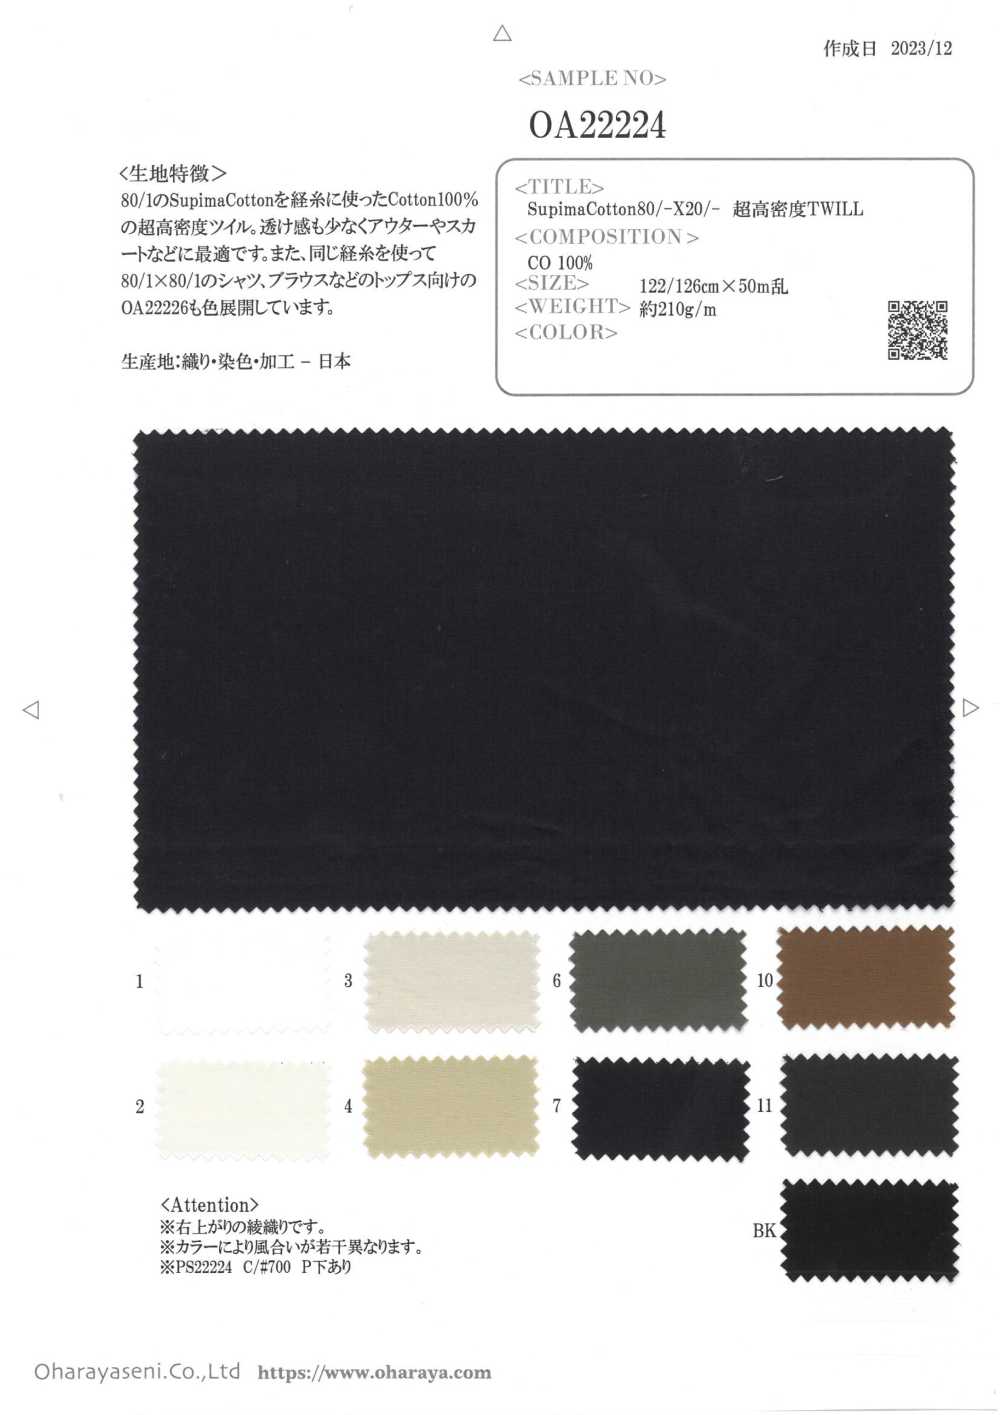 OA22224 SupimaCotton80/-X20/-Ultra High Density TWILL[Textile / Fabric] Oharayaseni